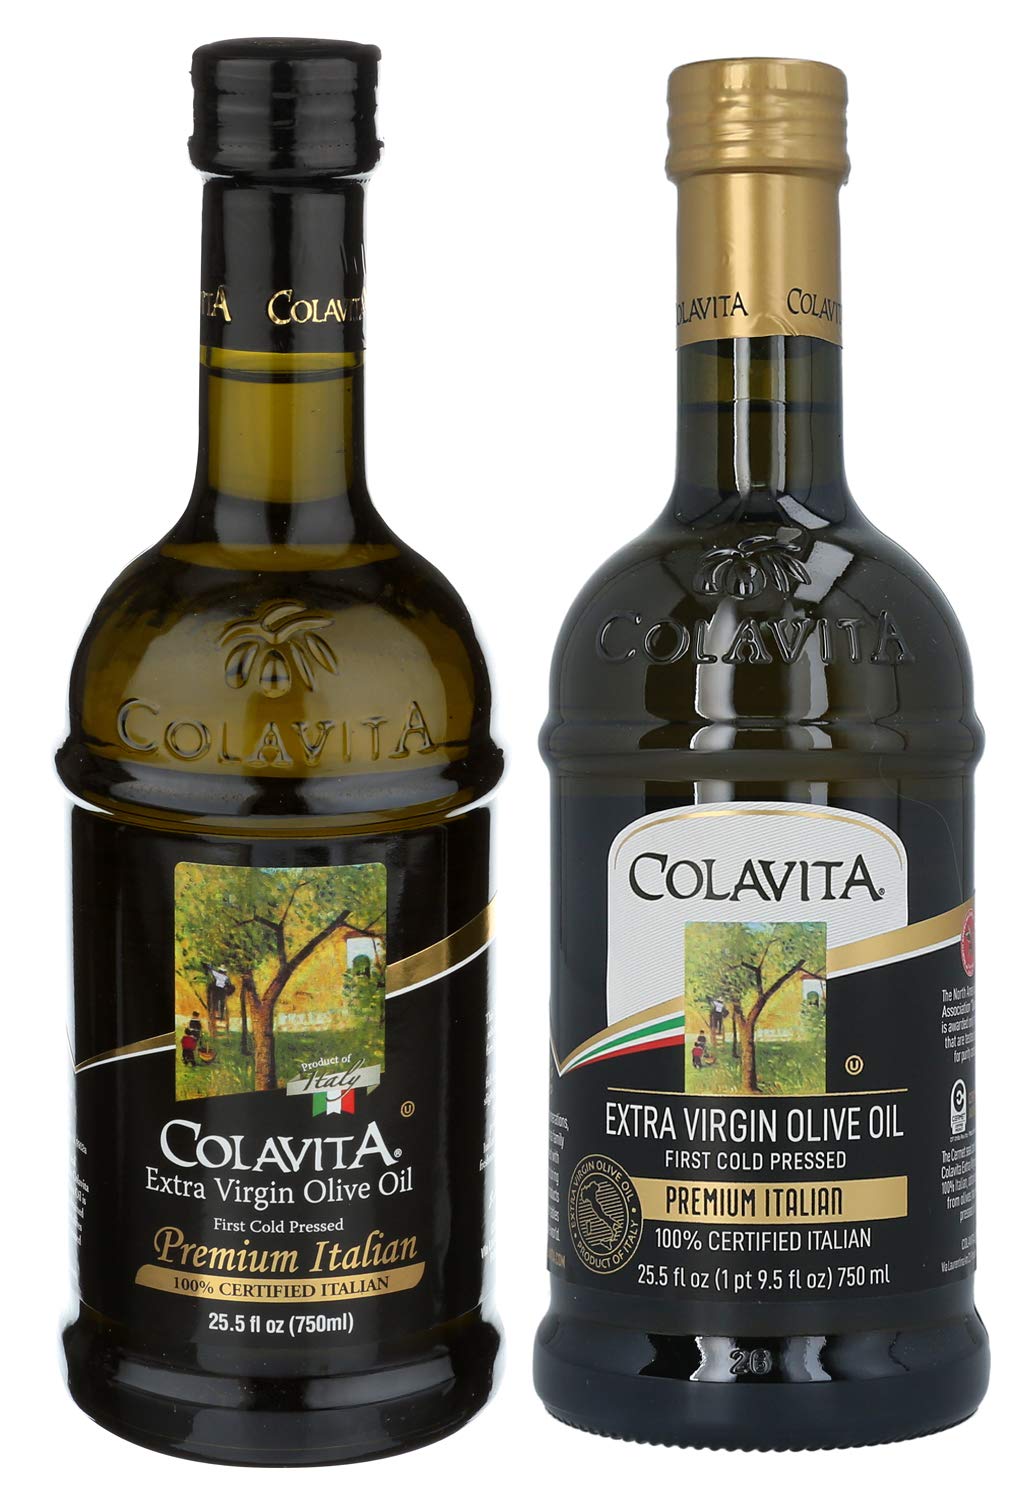 Colavita Premium Italian Extra Virgin Olive Oil, 25.5 Fl Oz (Pack of 2), Glass Bottles - Packaging May Vary